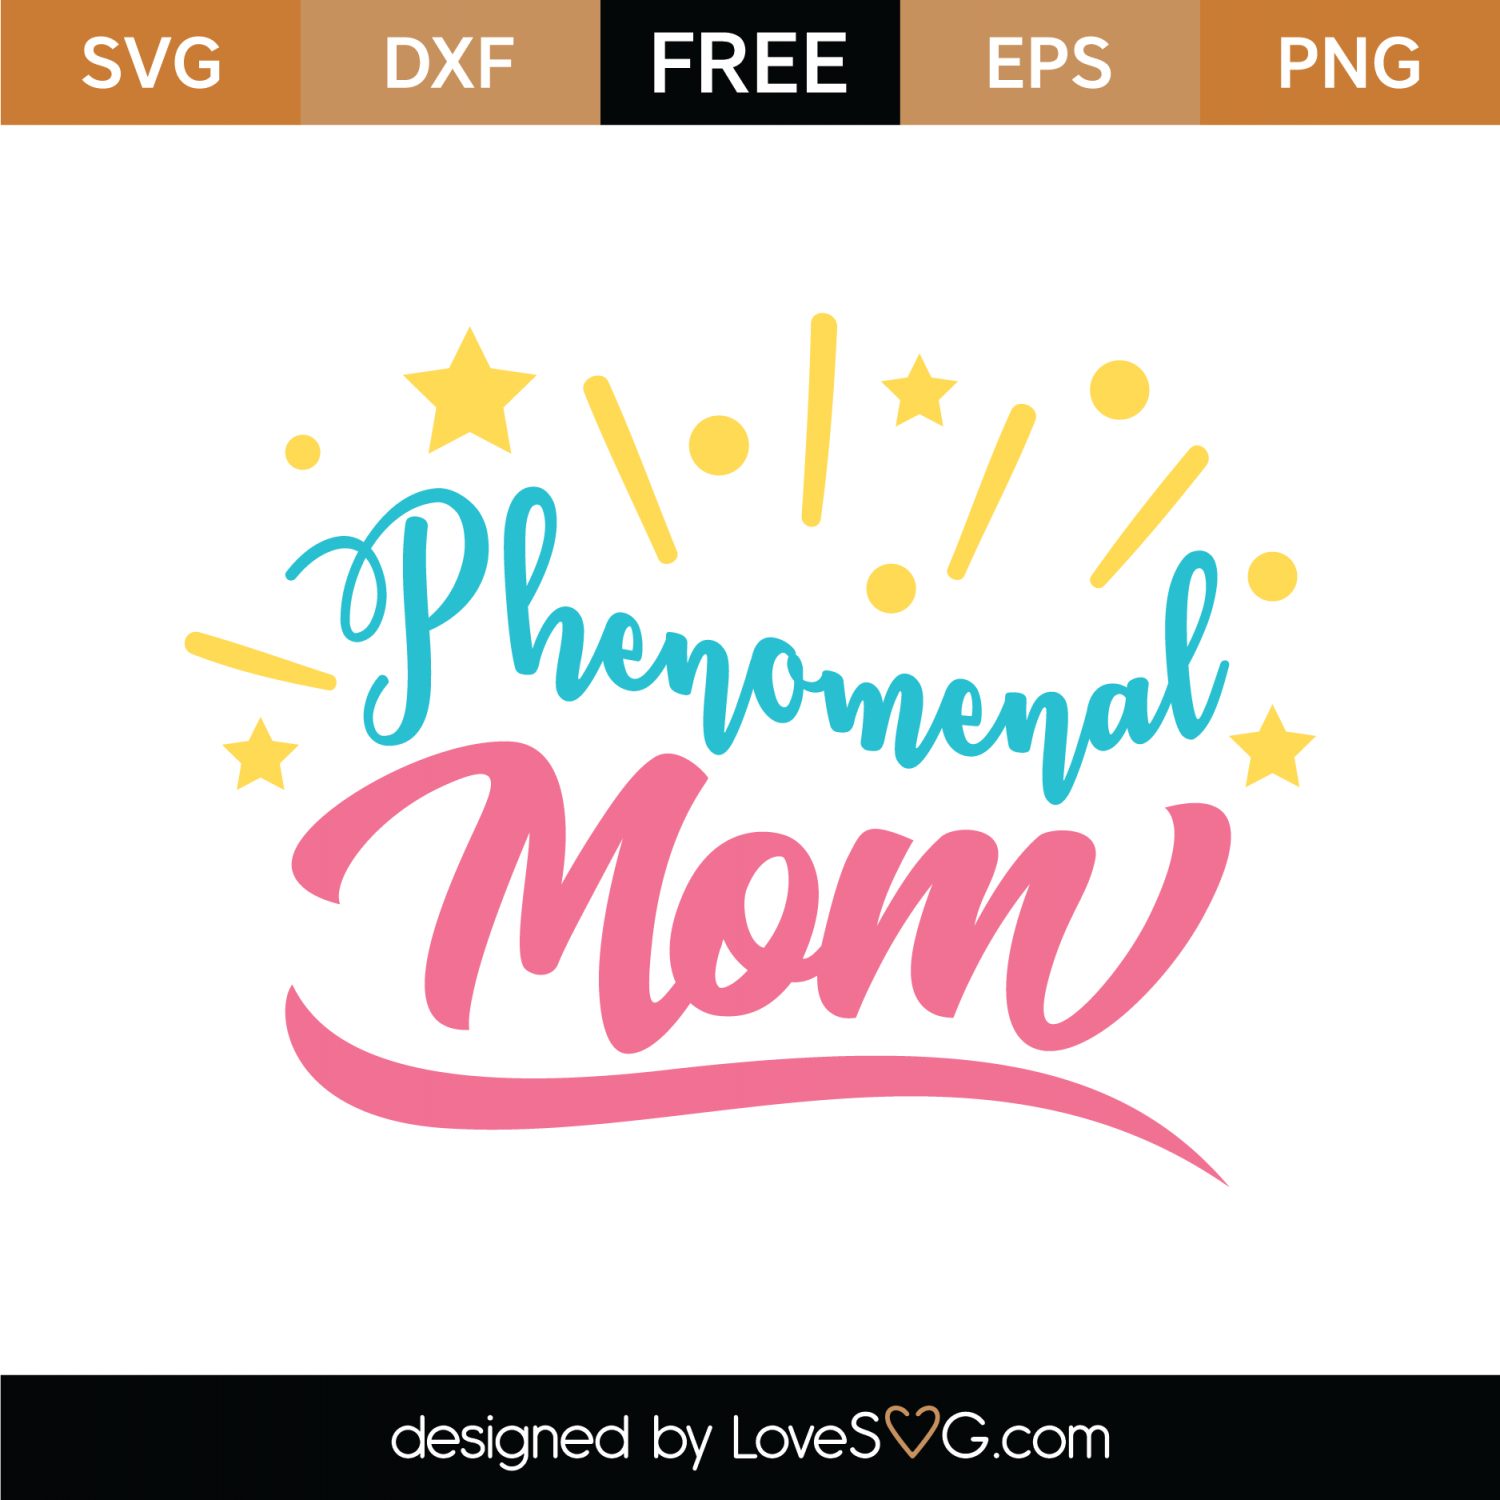 Download Free Phenomenal Mom SVG Cut File | Lovesvg.com